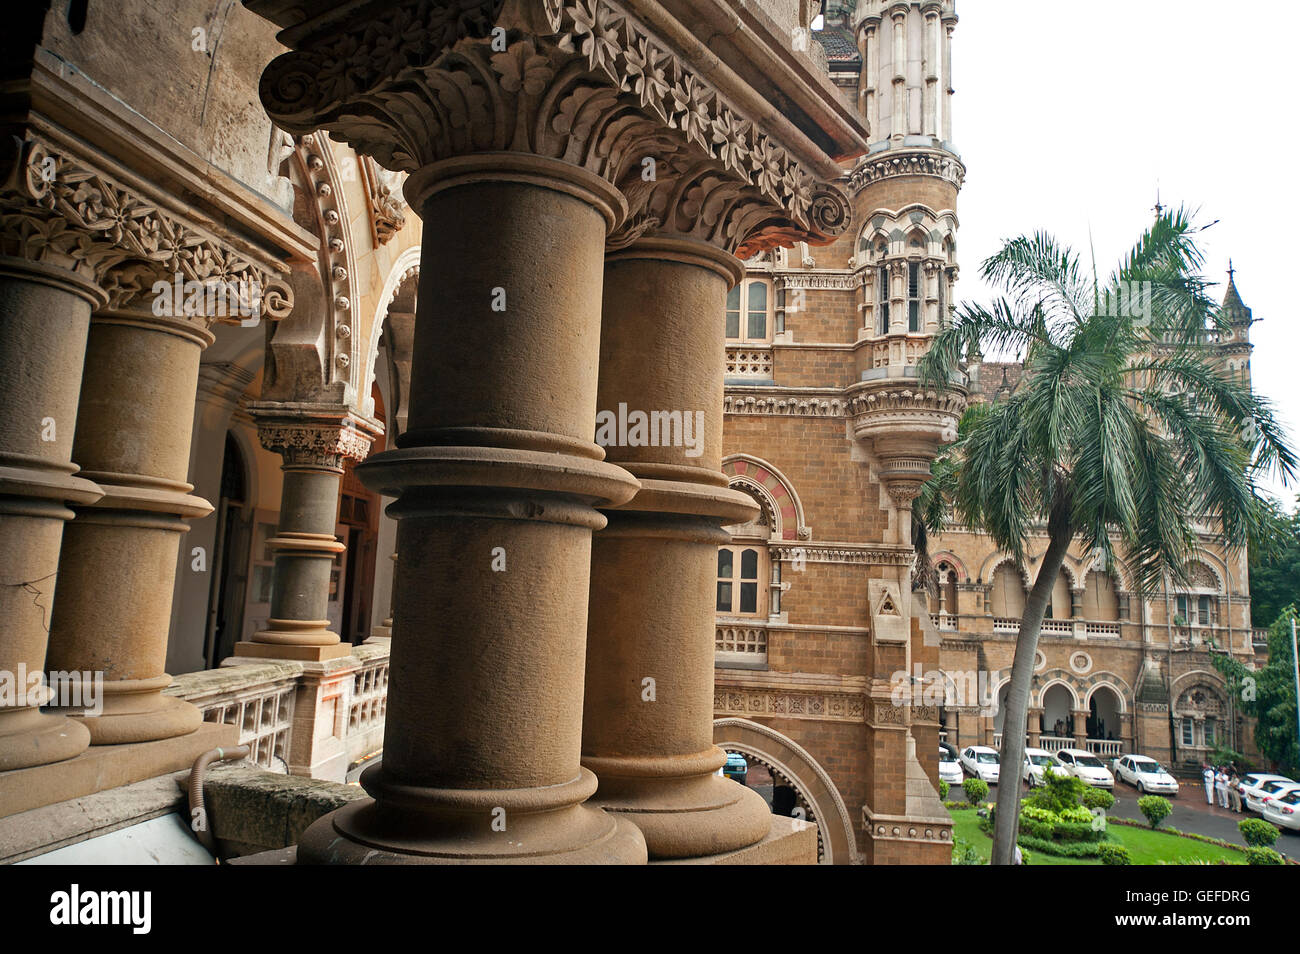 Le terminus de Chatrapati shivaji, Mumbai, Inde, Asie Banque D'Images